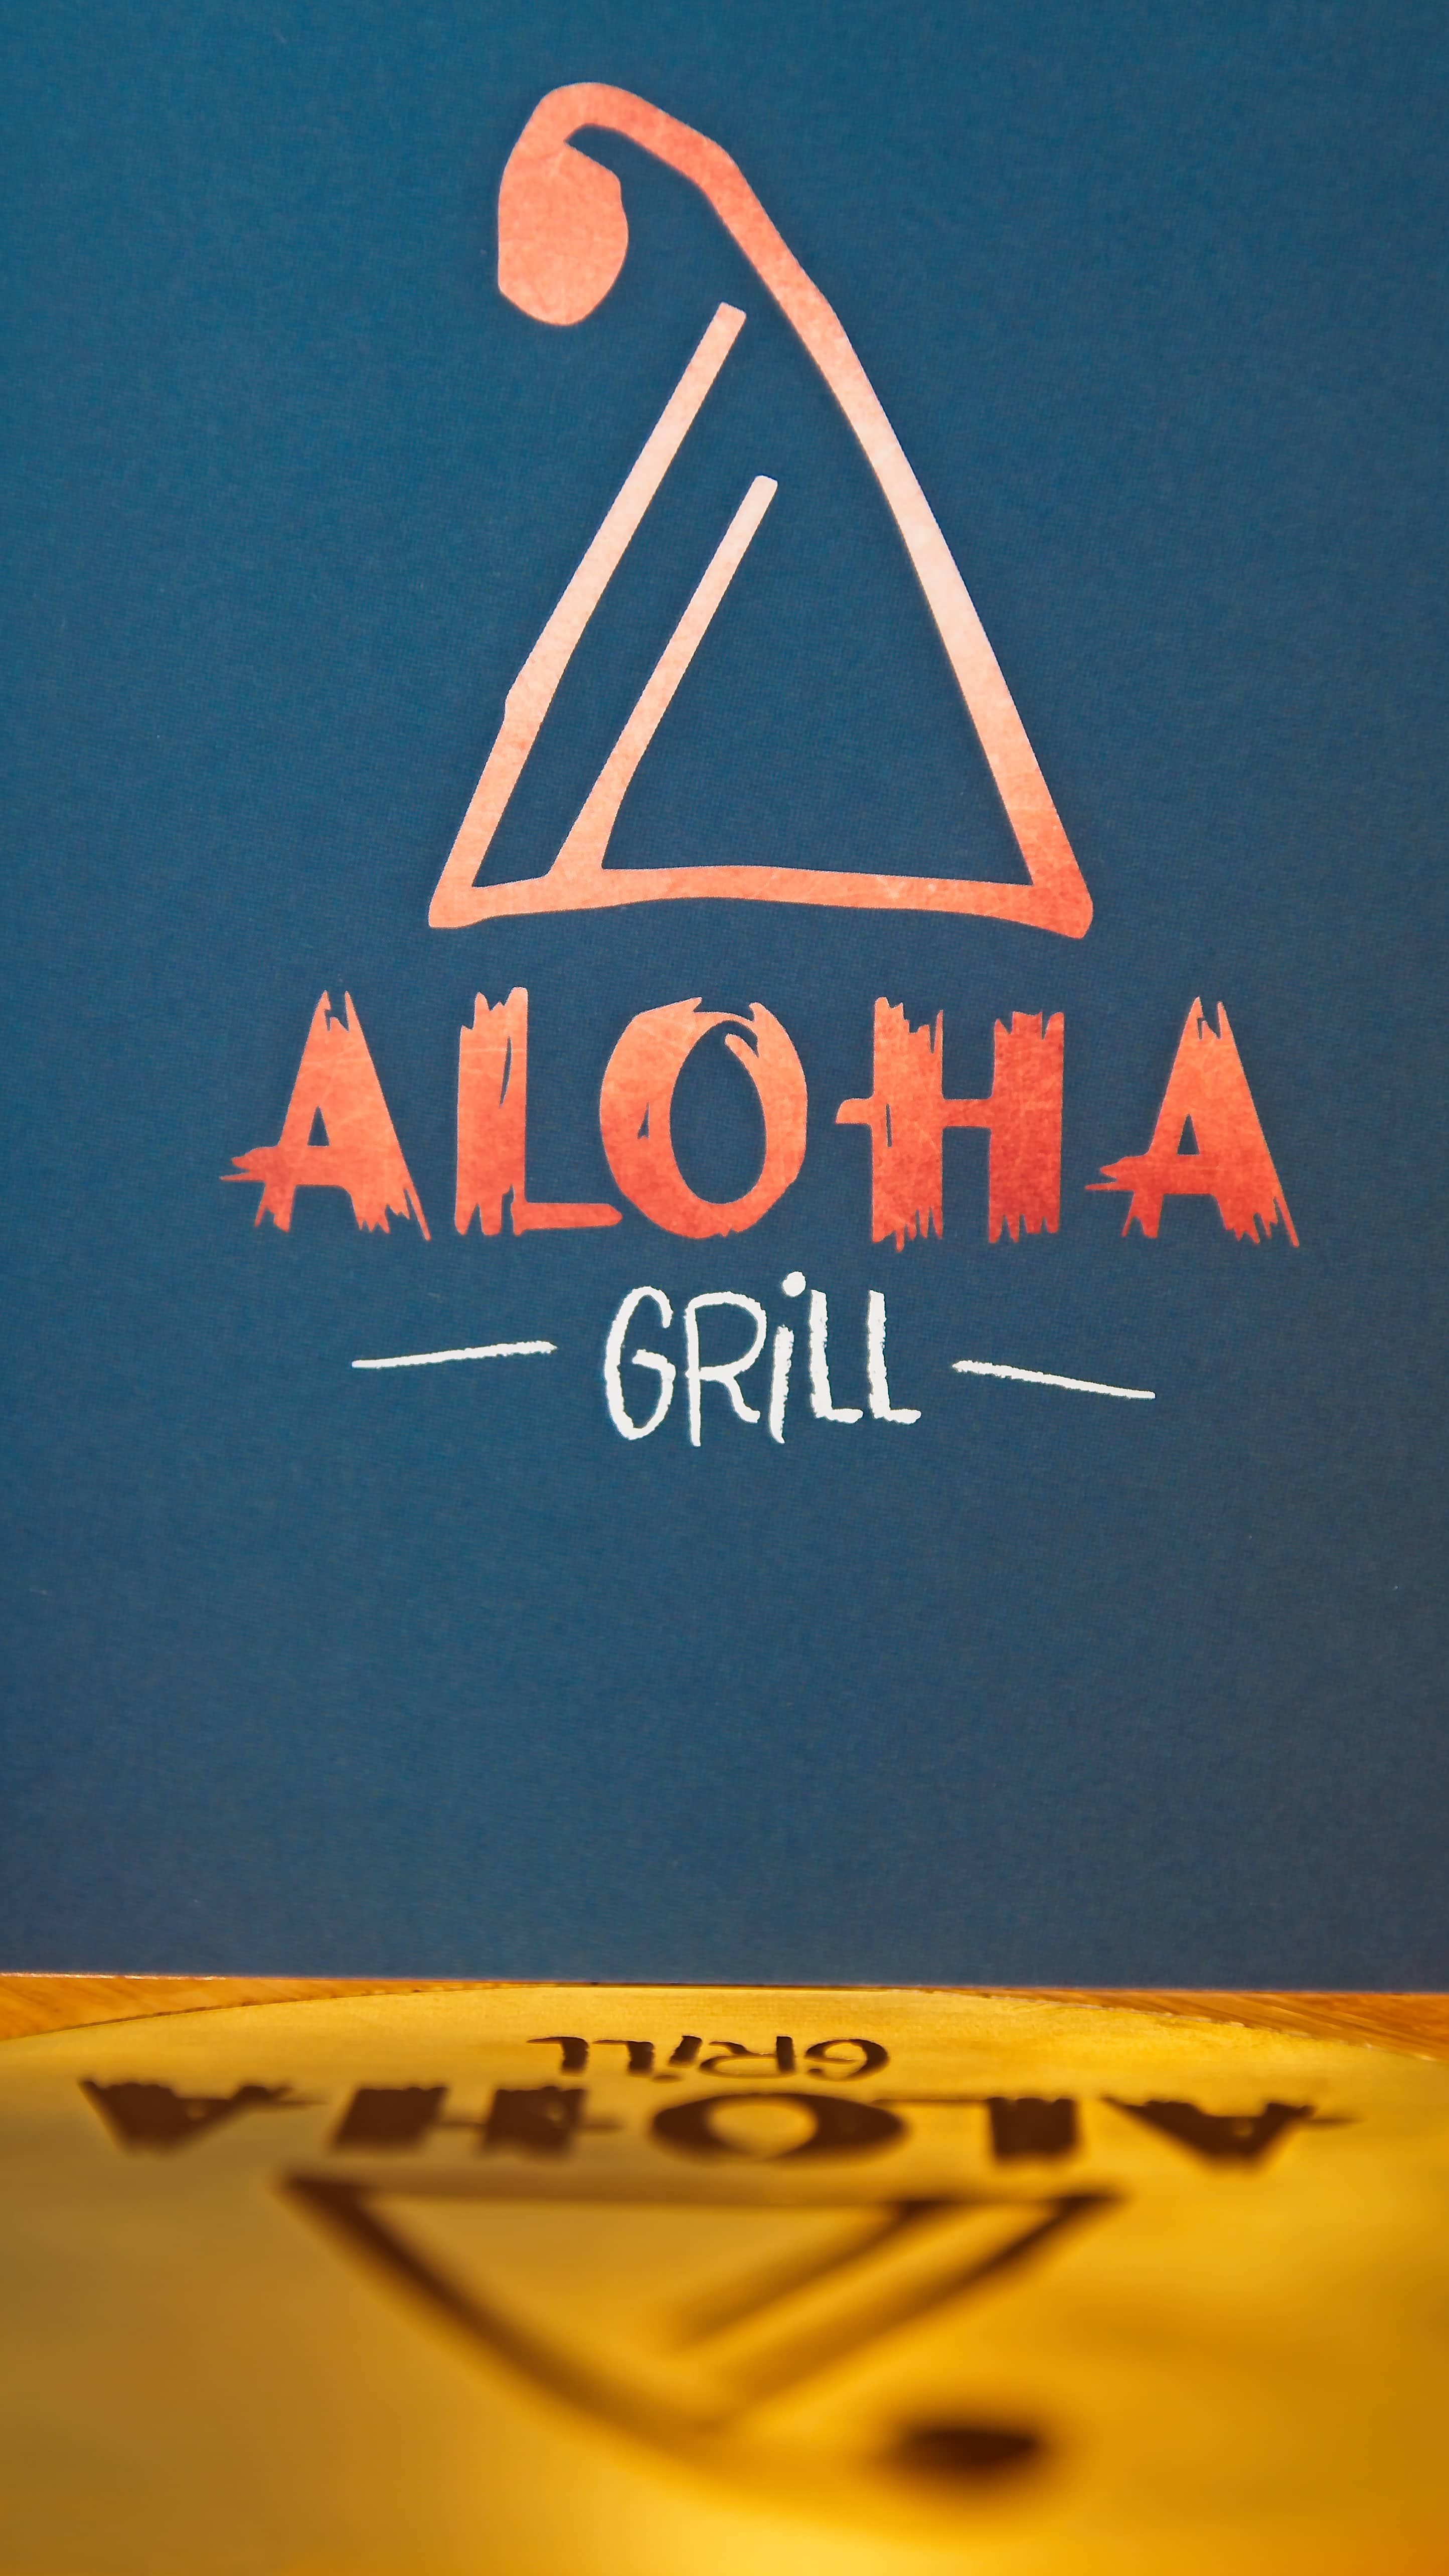 041_Aloha grill_2020_10